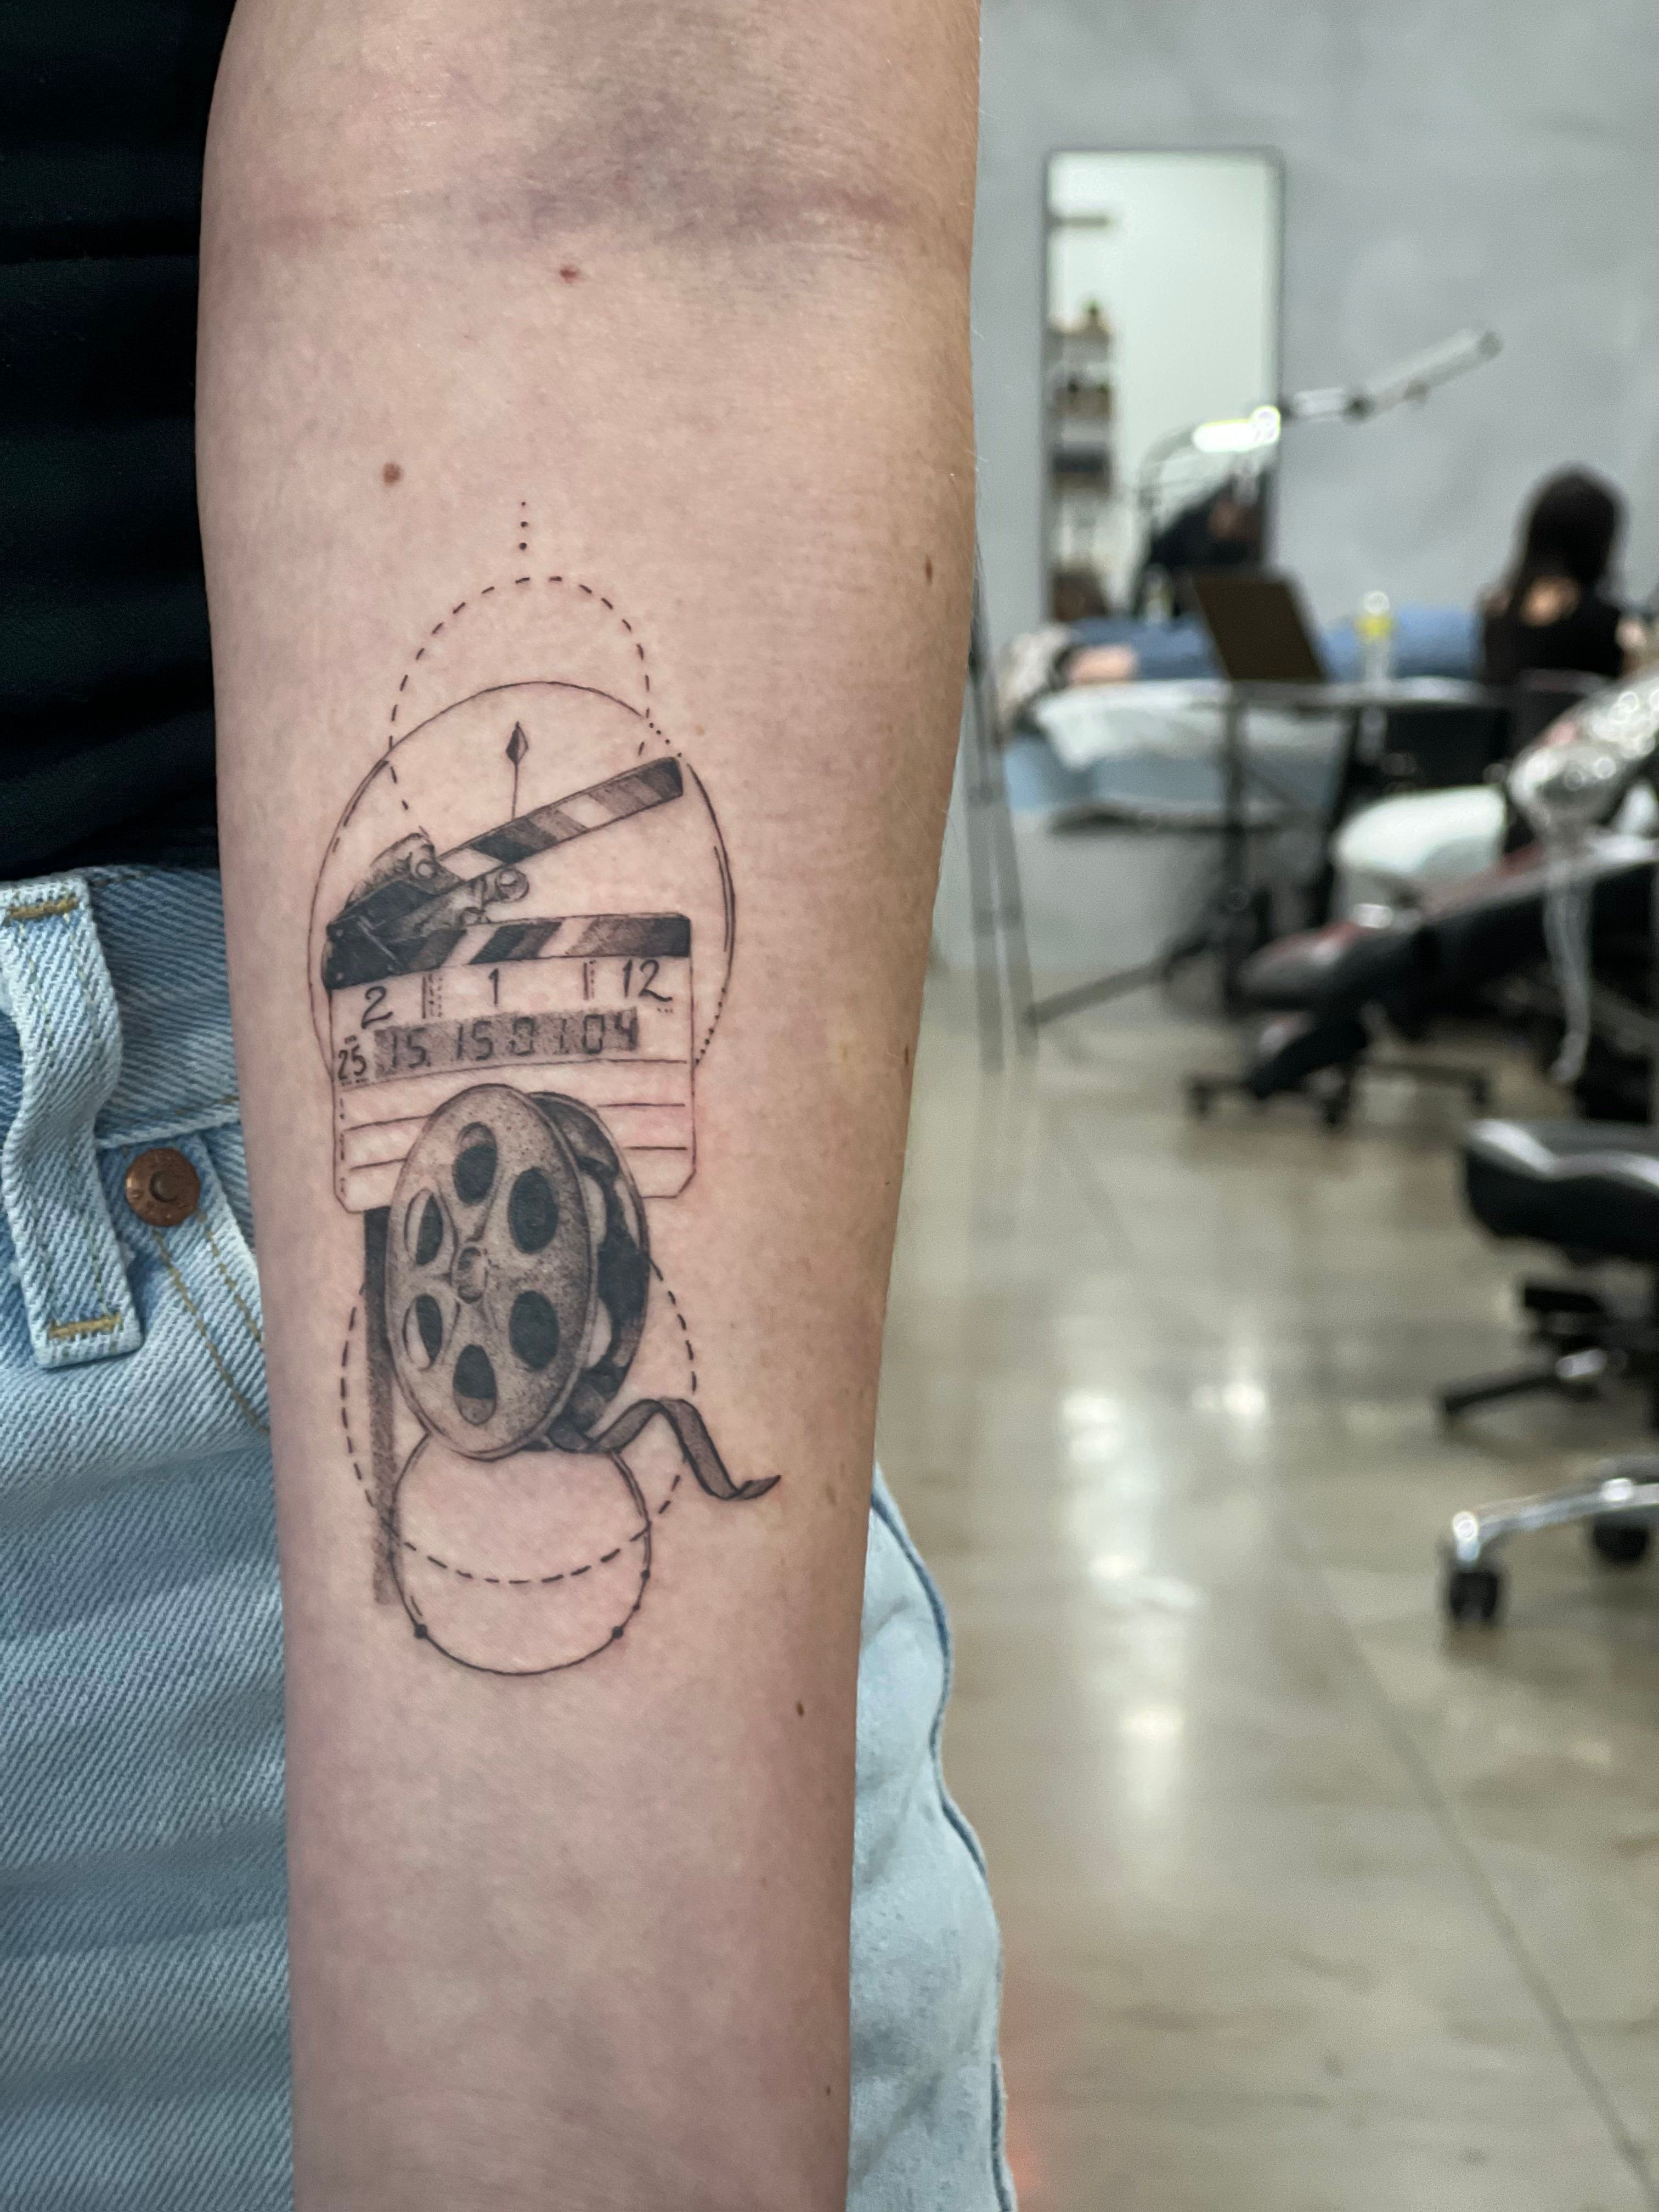 A cinema screen tattoo idea | TattoosAI